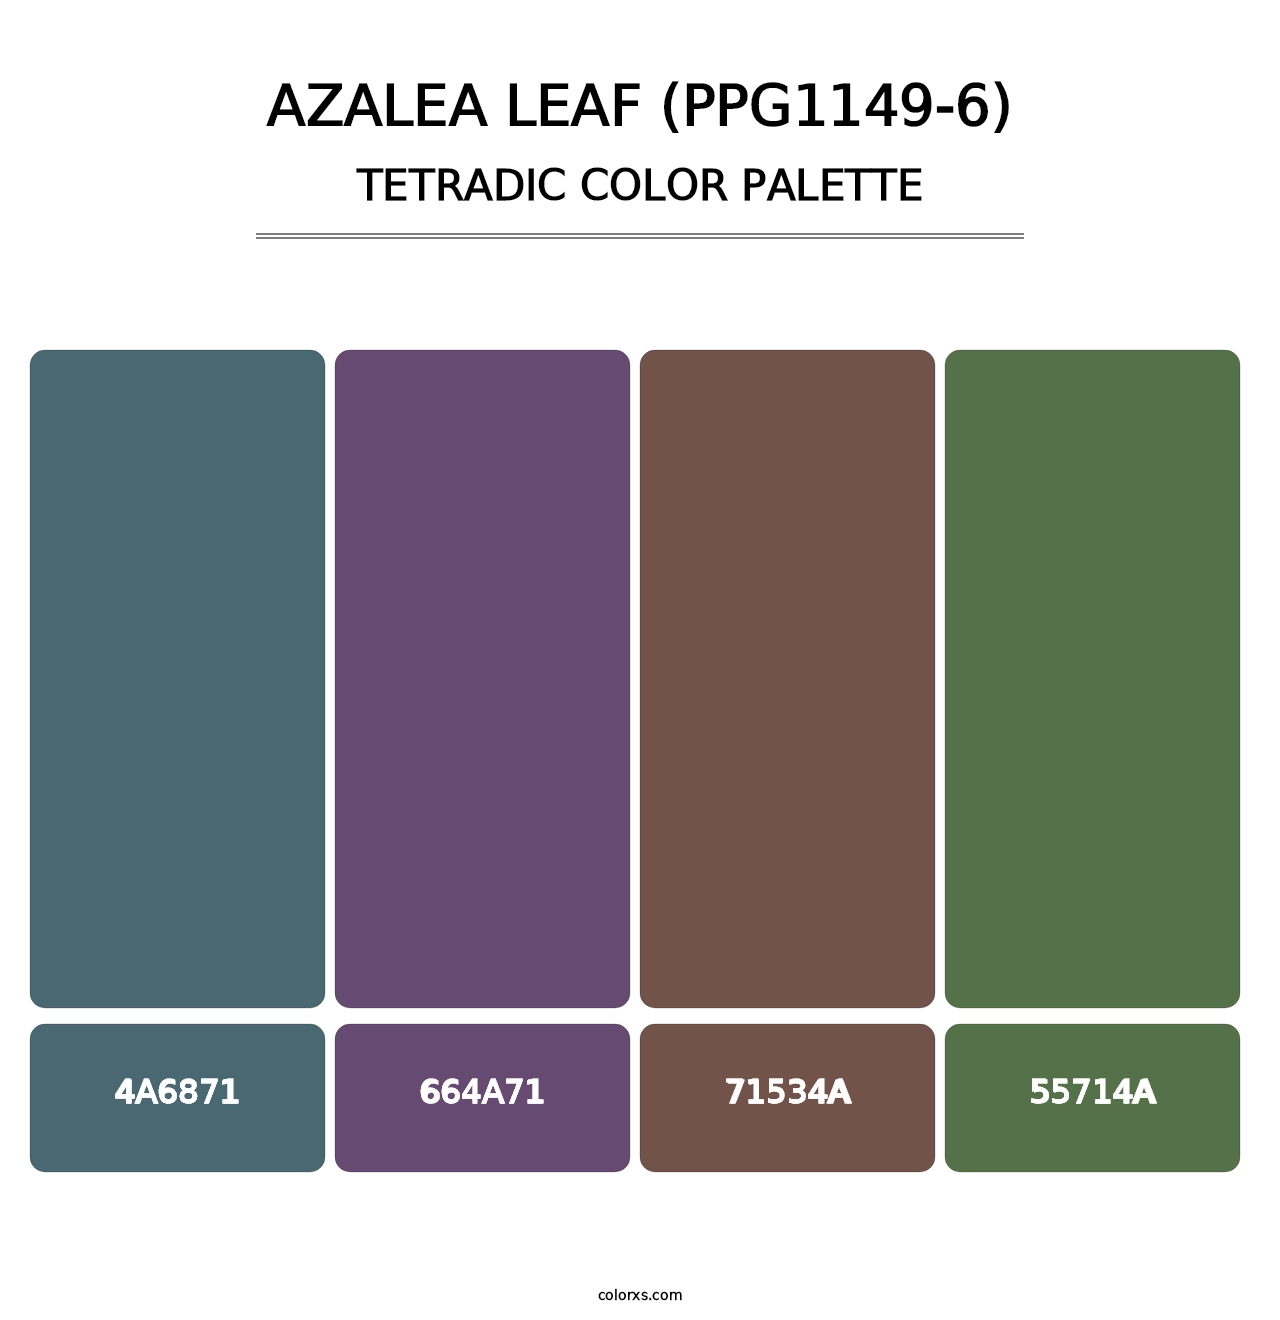 Azalea Leaf (PPG1149-6) - Tetradic Color Palette